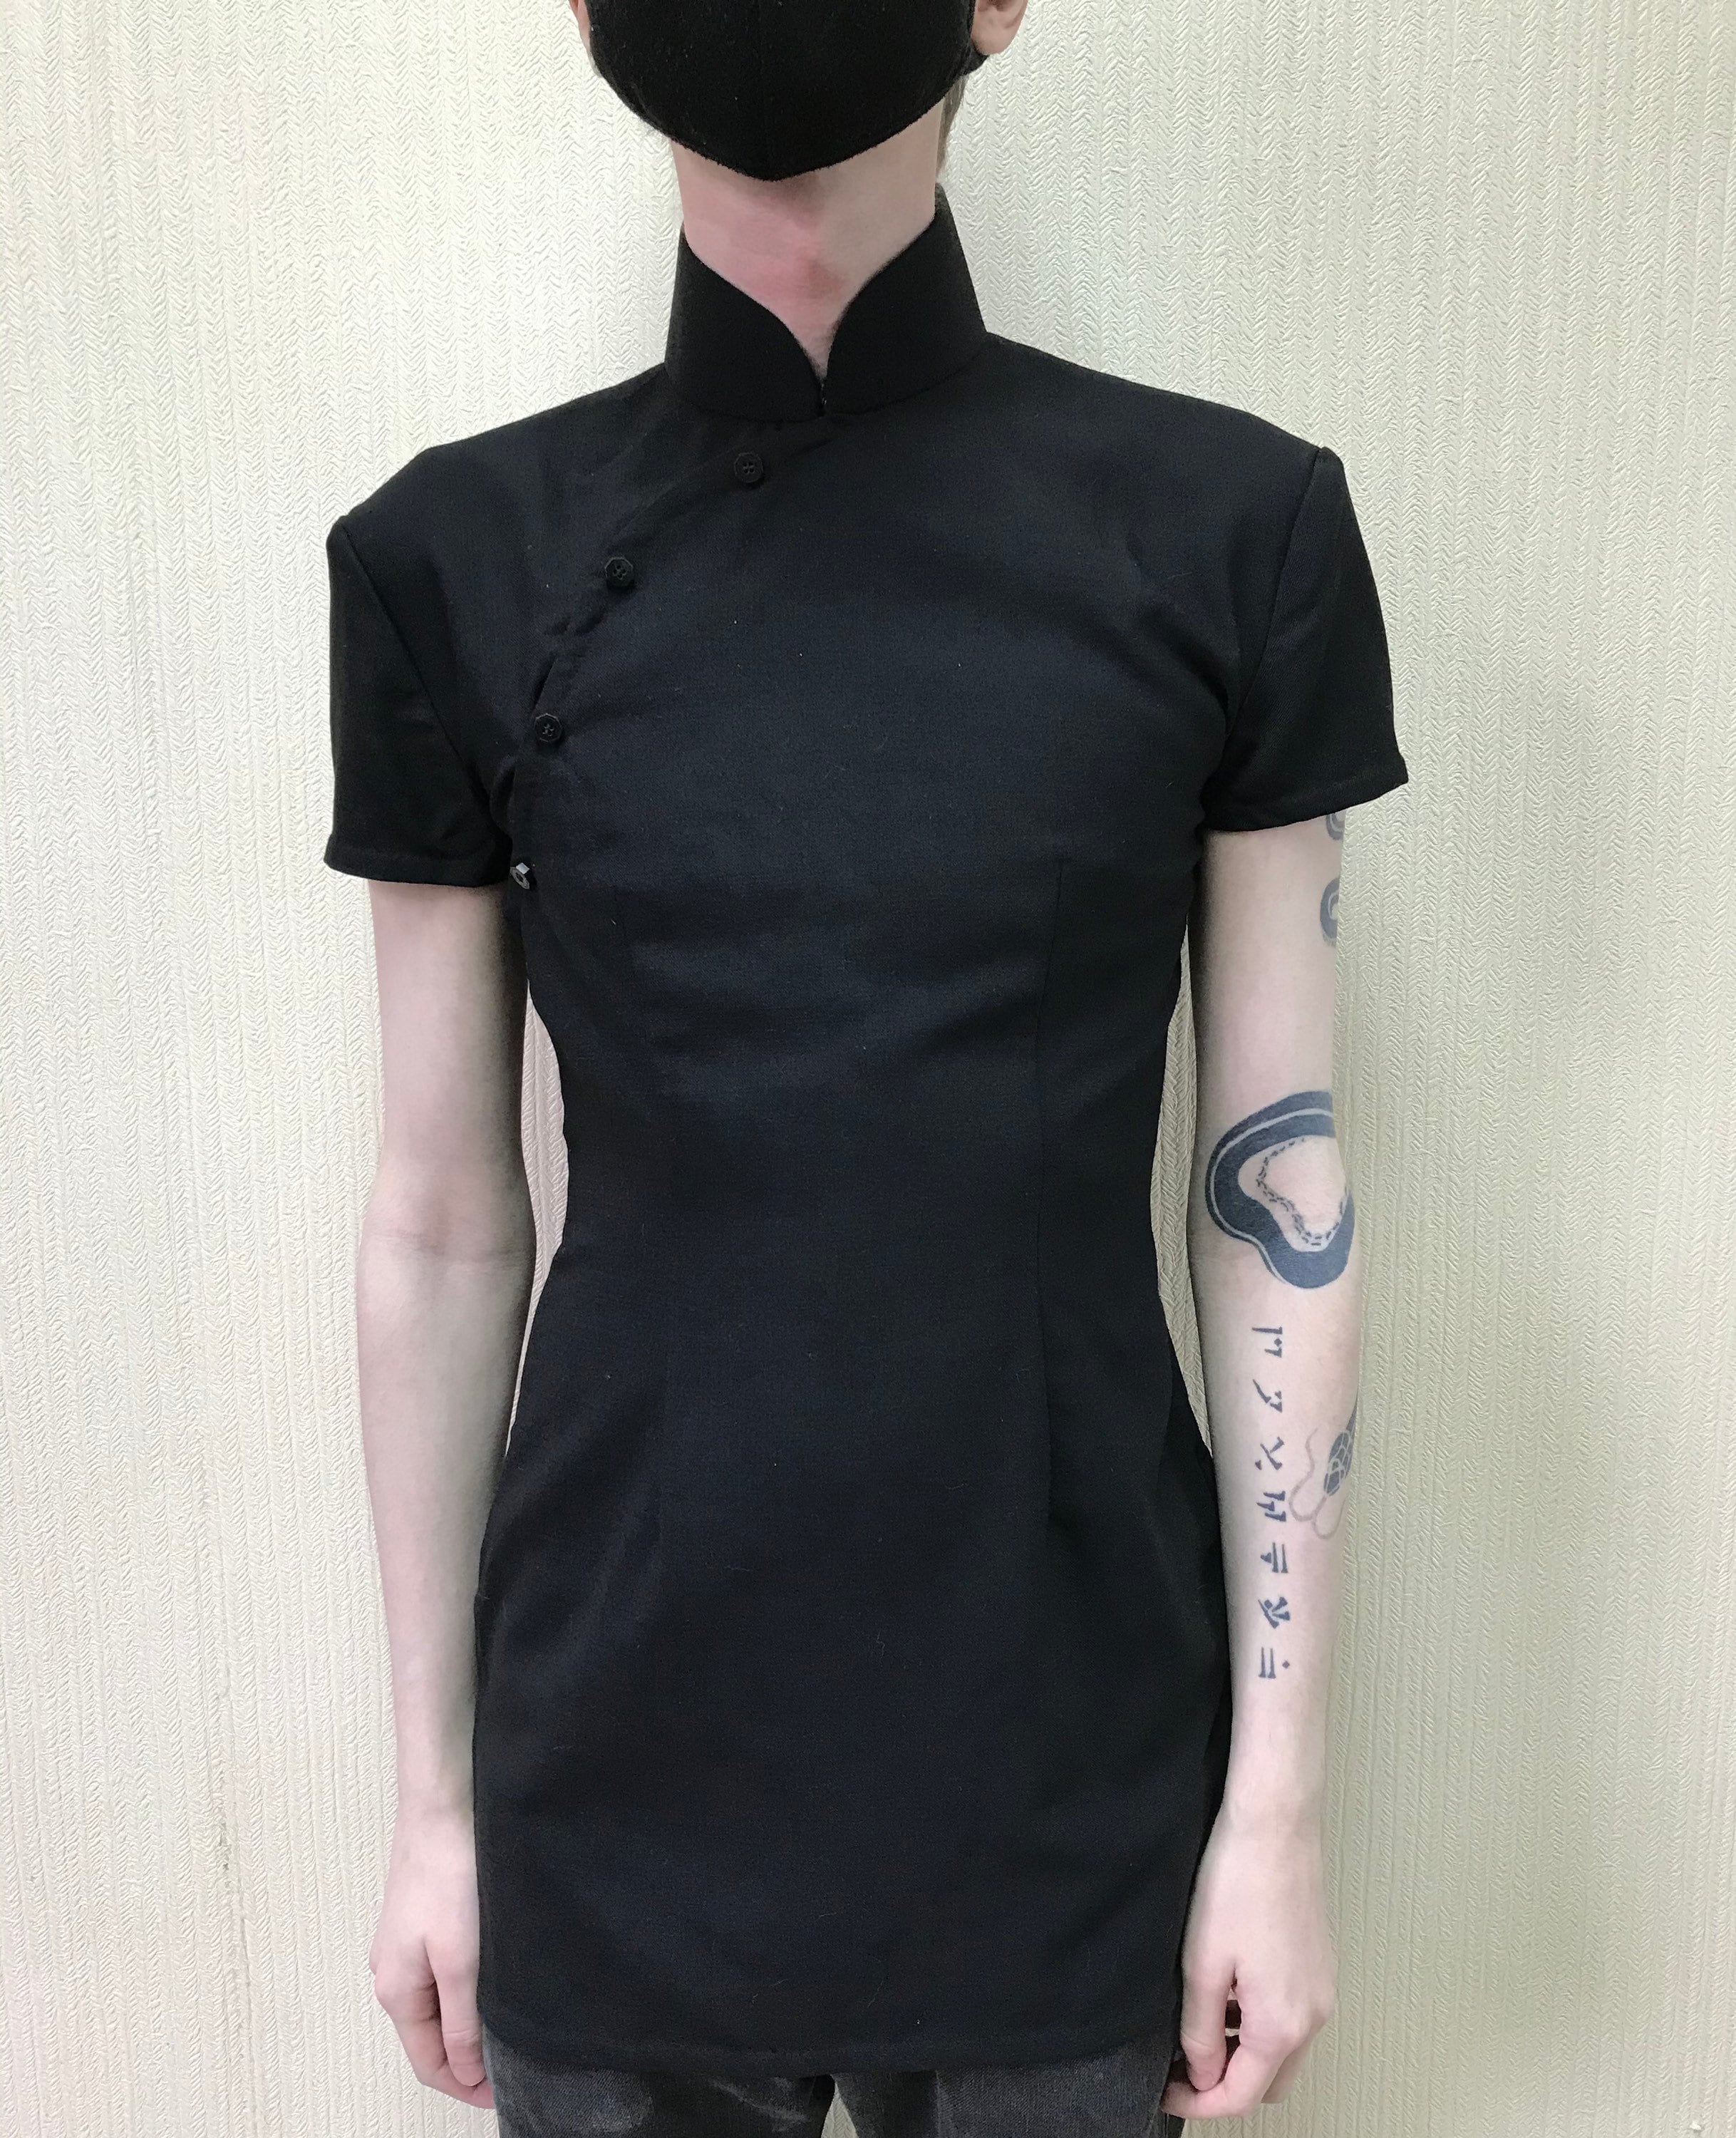 Kleding Gender-neutrale kleding volwassenen Tops & T-shirts Oxfords | zwart katoen Unisex Cheongsam Top achthoekige hoorn knoppen Op maat gemaakt 